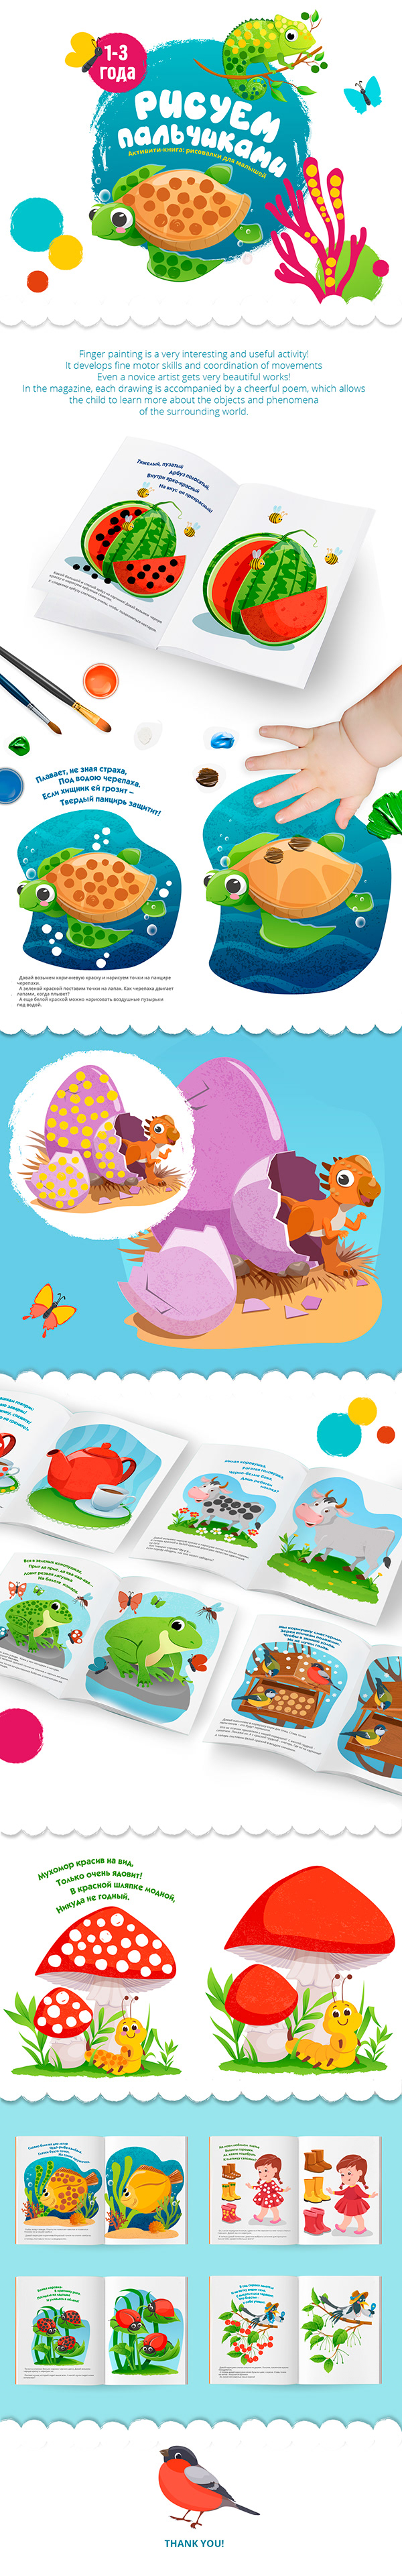 Illustrations for a children's educational magazine